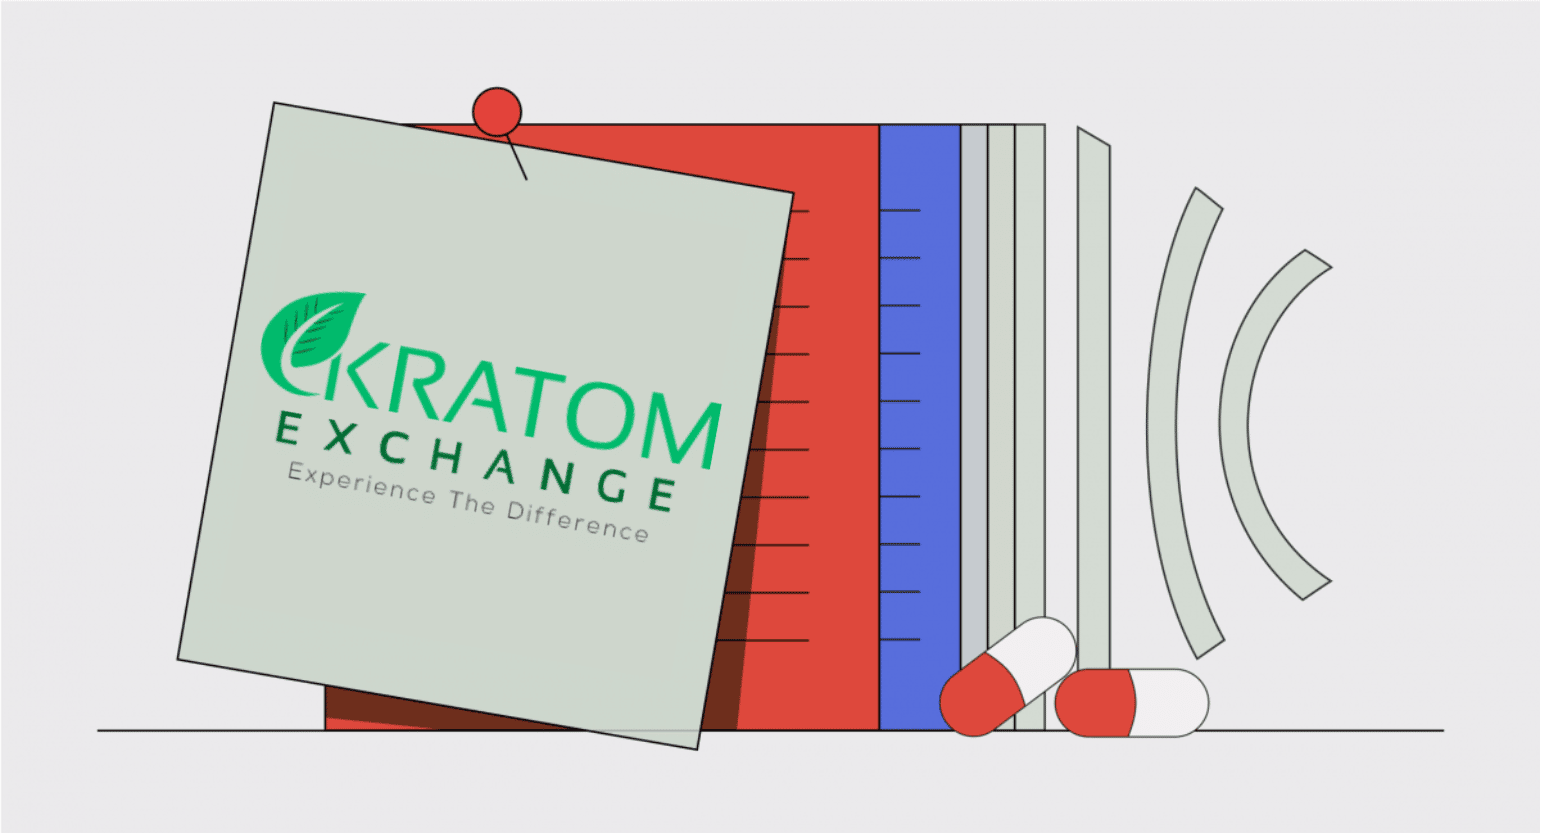 Kratom Exchange